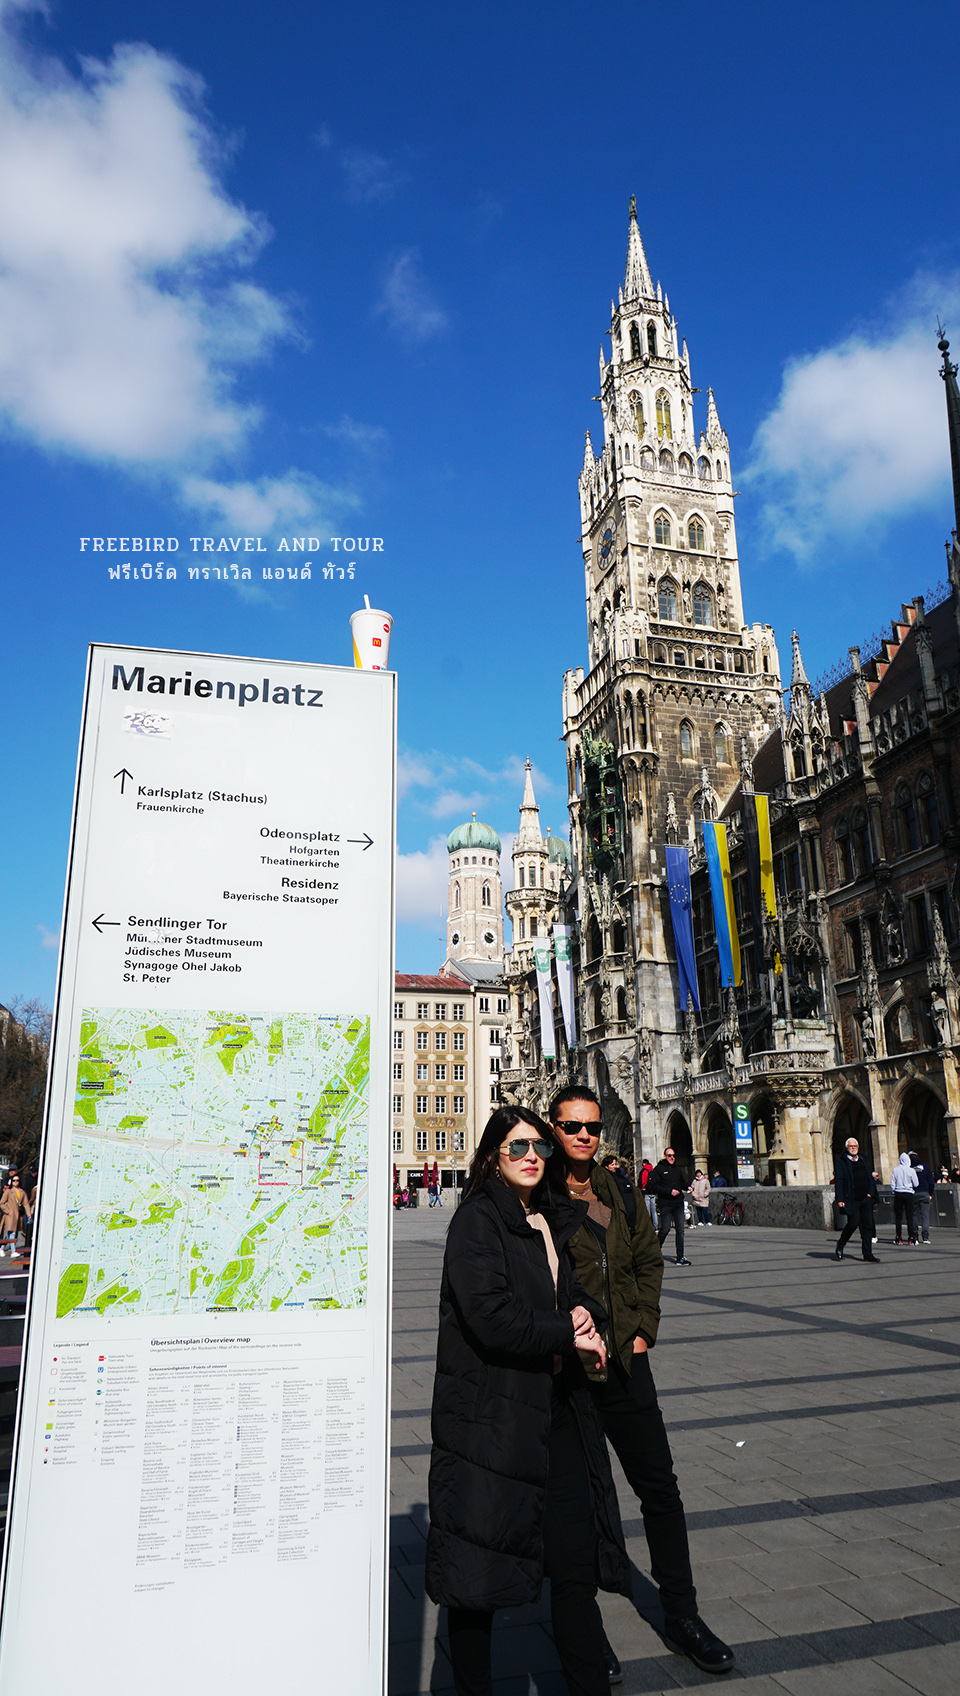 Marienplatz-munich-germany-freebirdtour